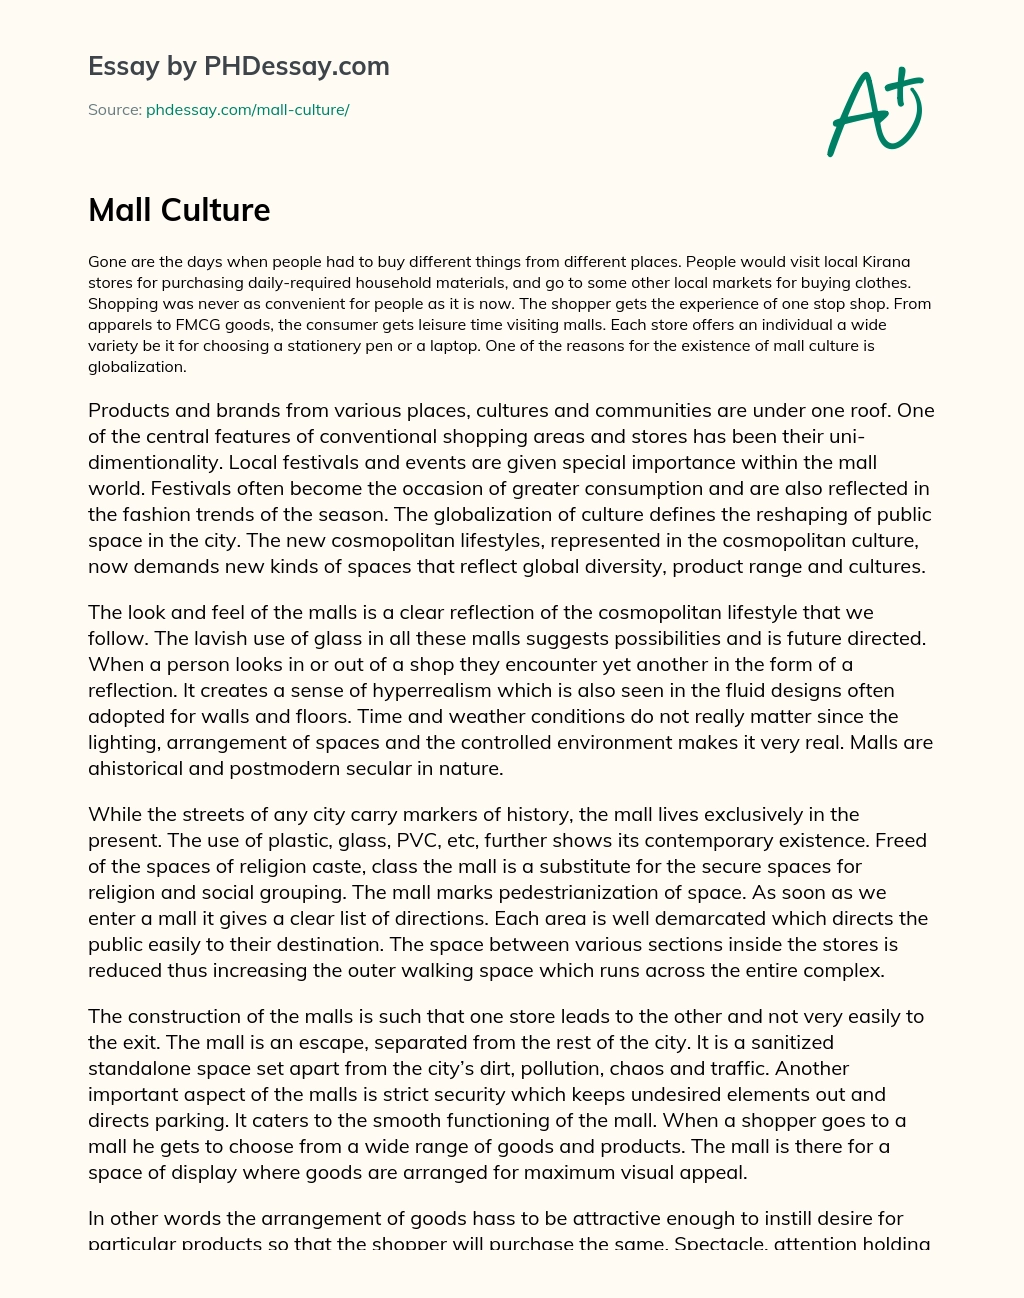 Mall Culture essay